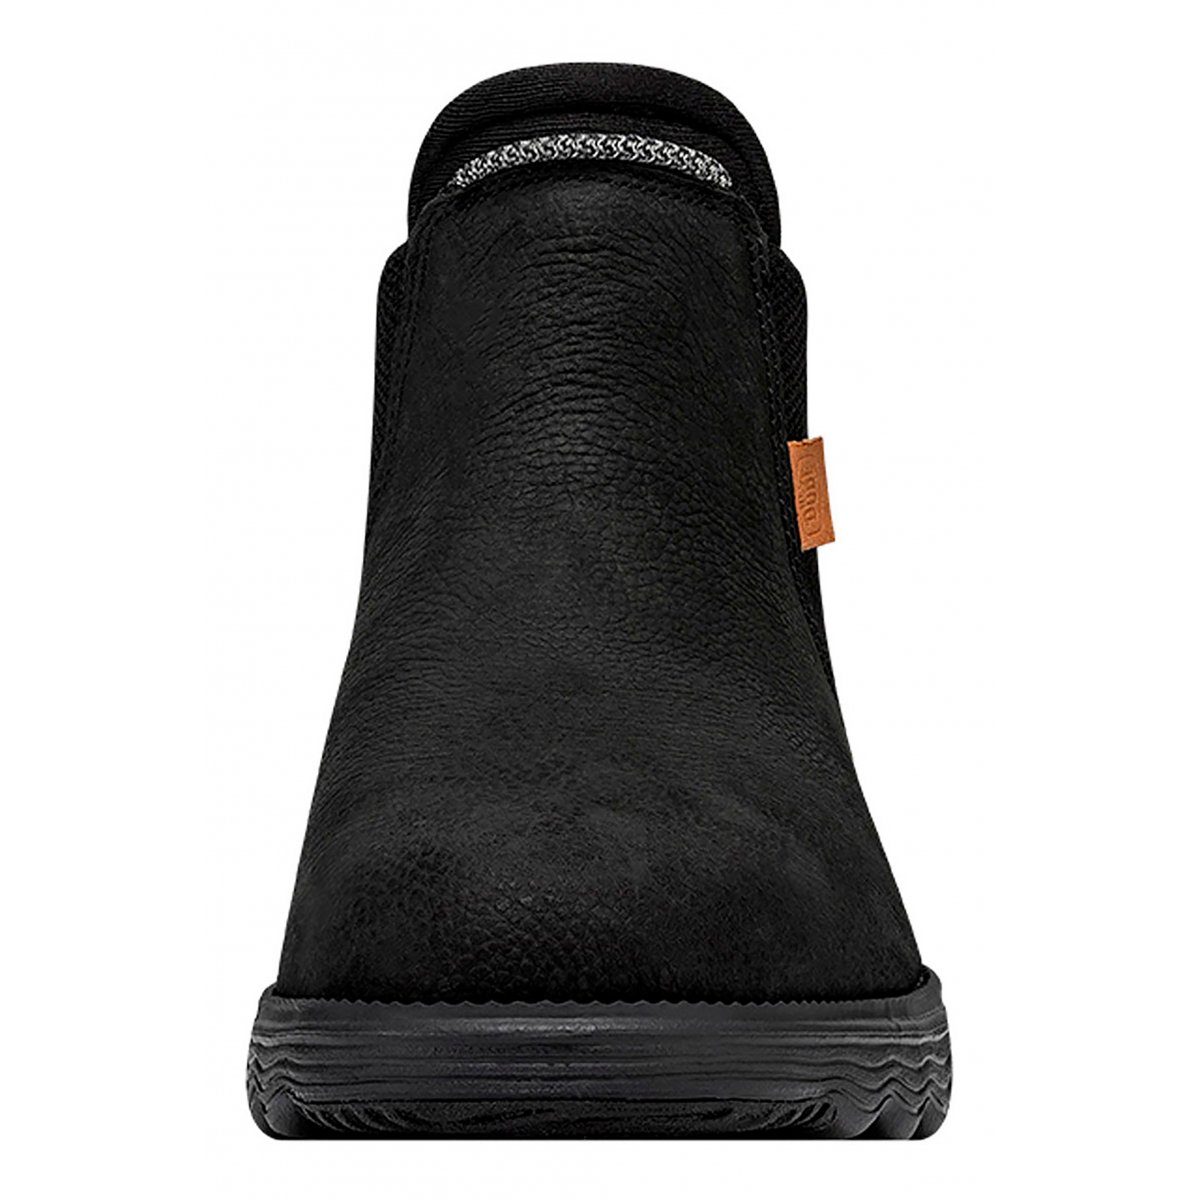 Branson Boot Craft Leather M 001 img 4